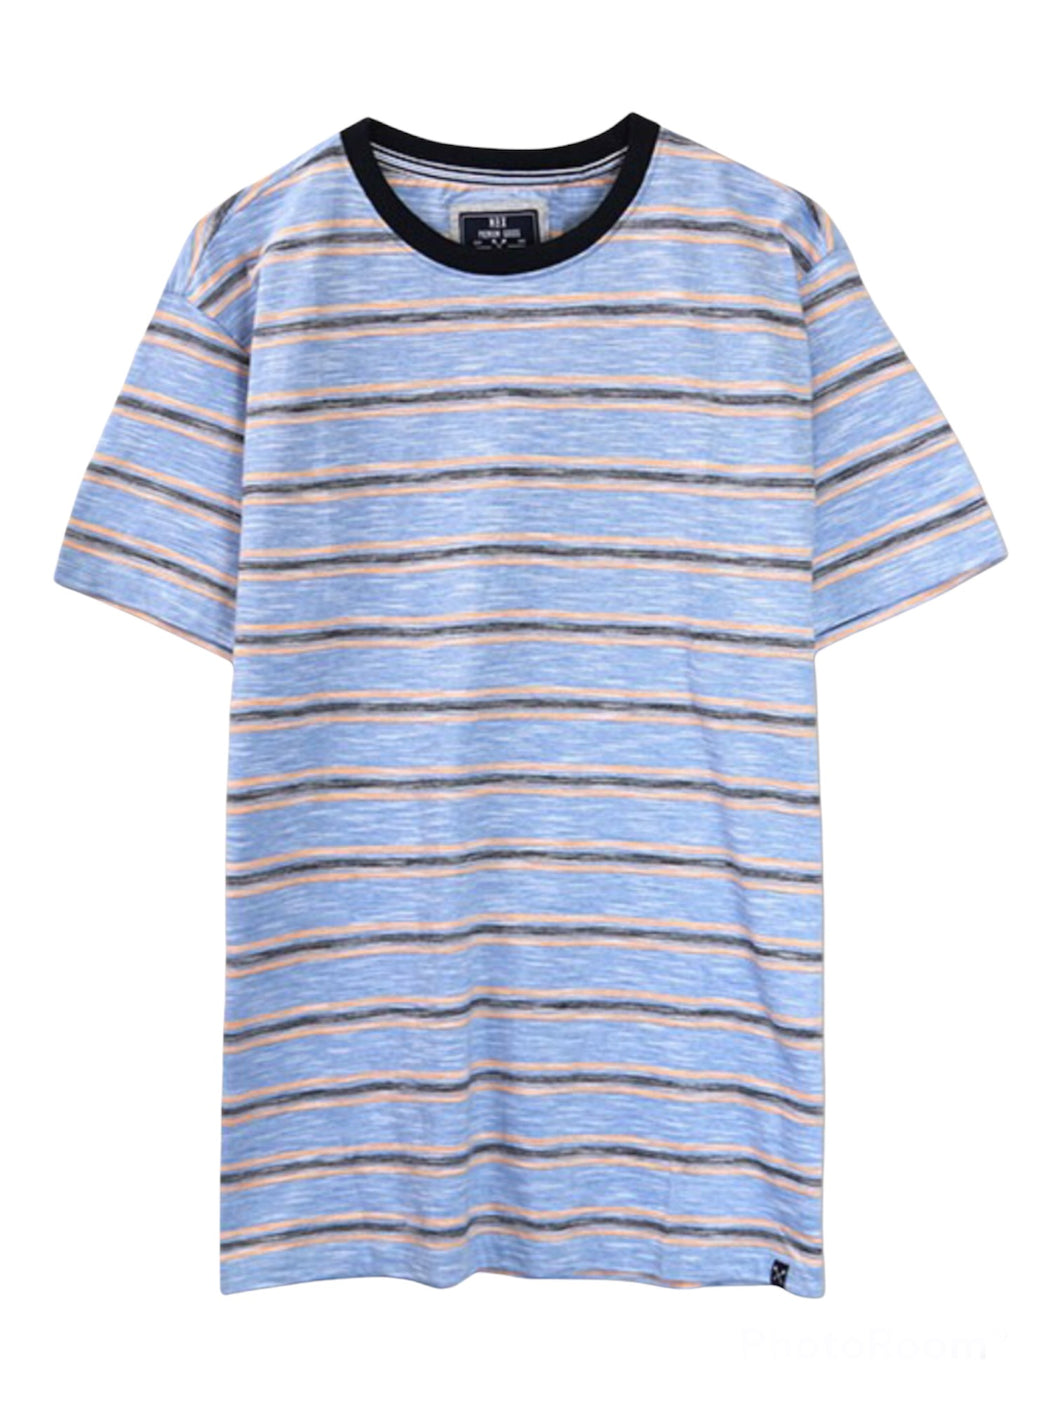 Heather Blue Stripe Shirt